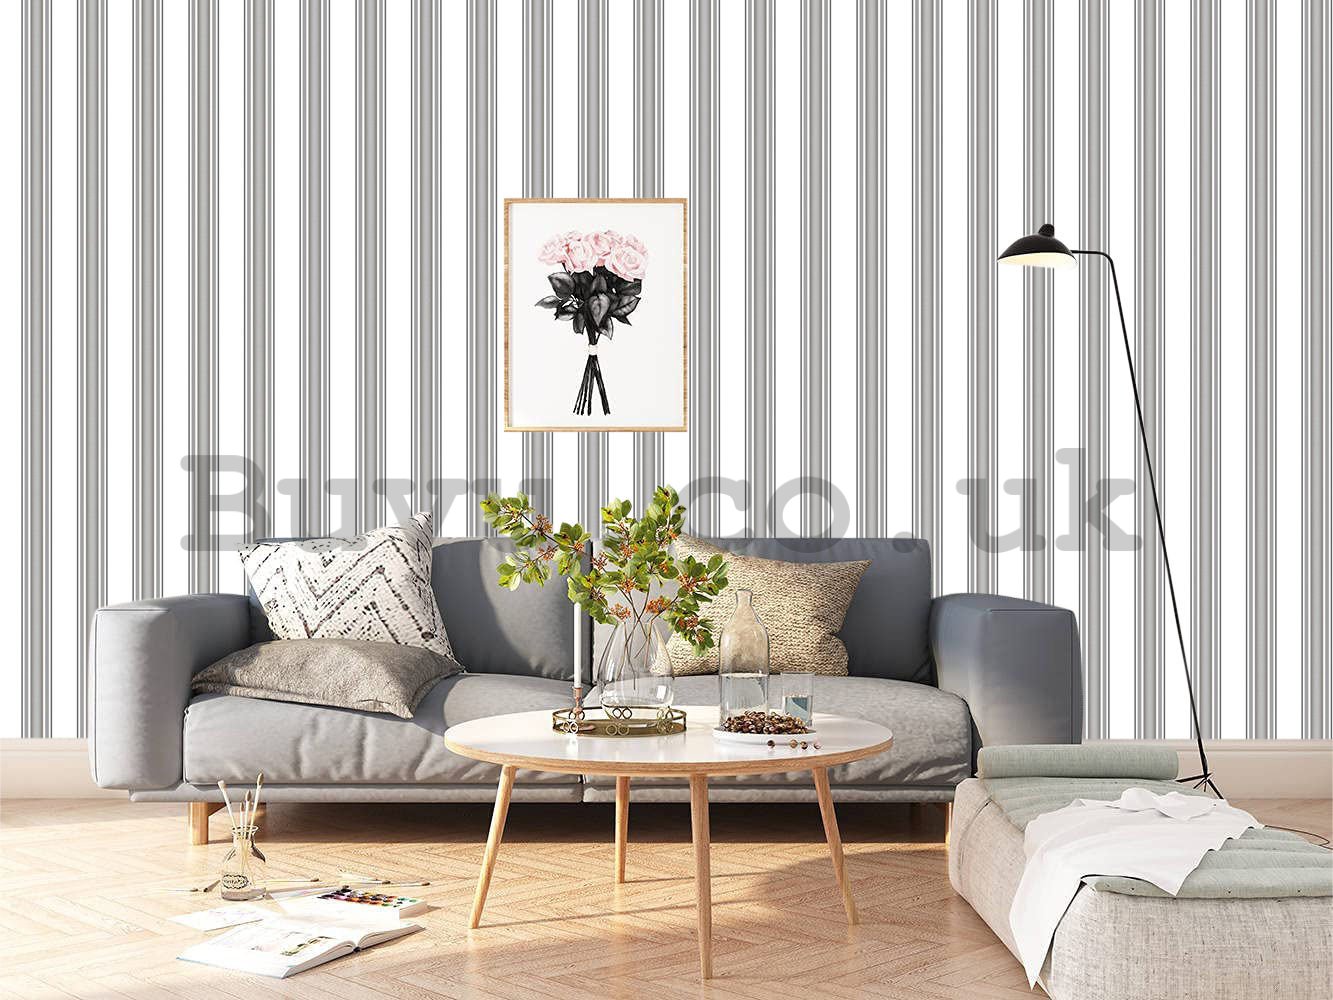 Vinyl wallpaper vertical stripes shades of dark gray on a white background